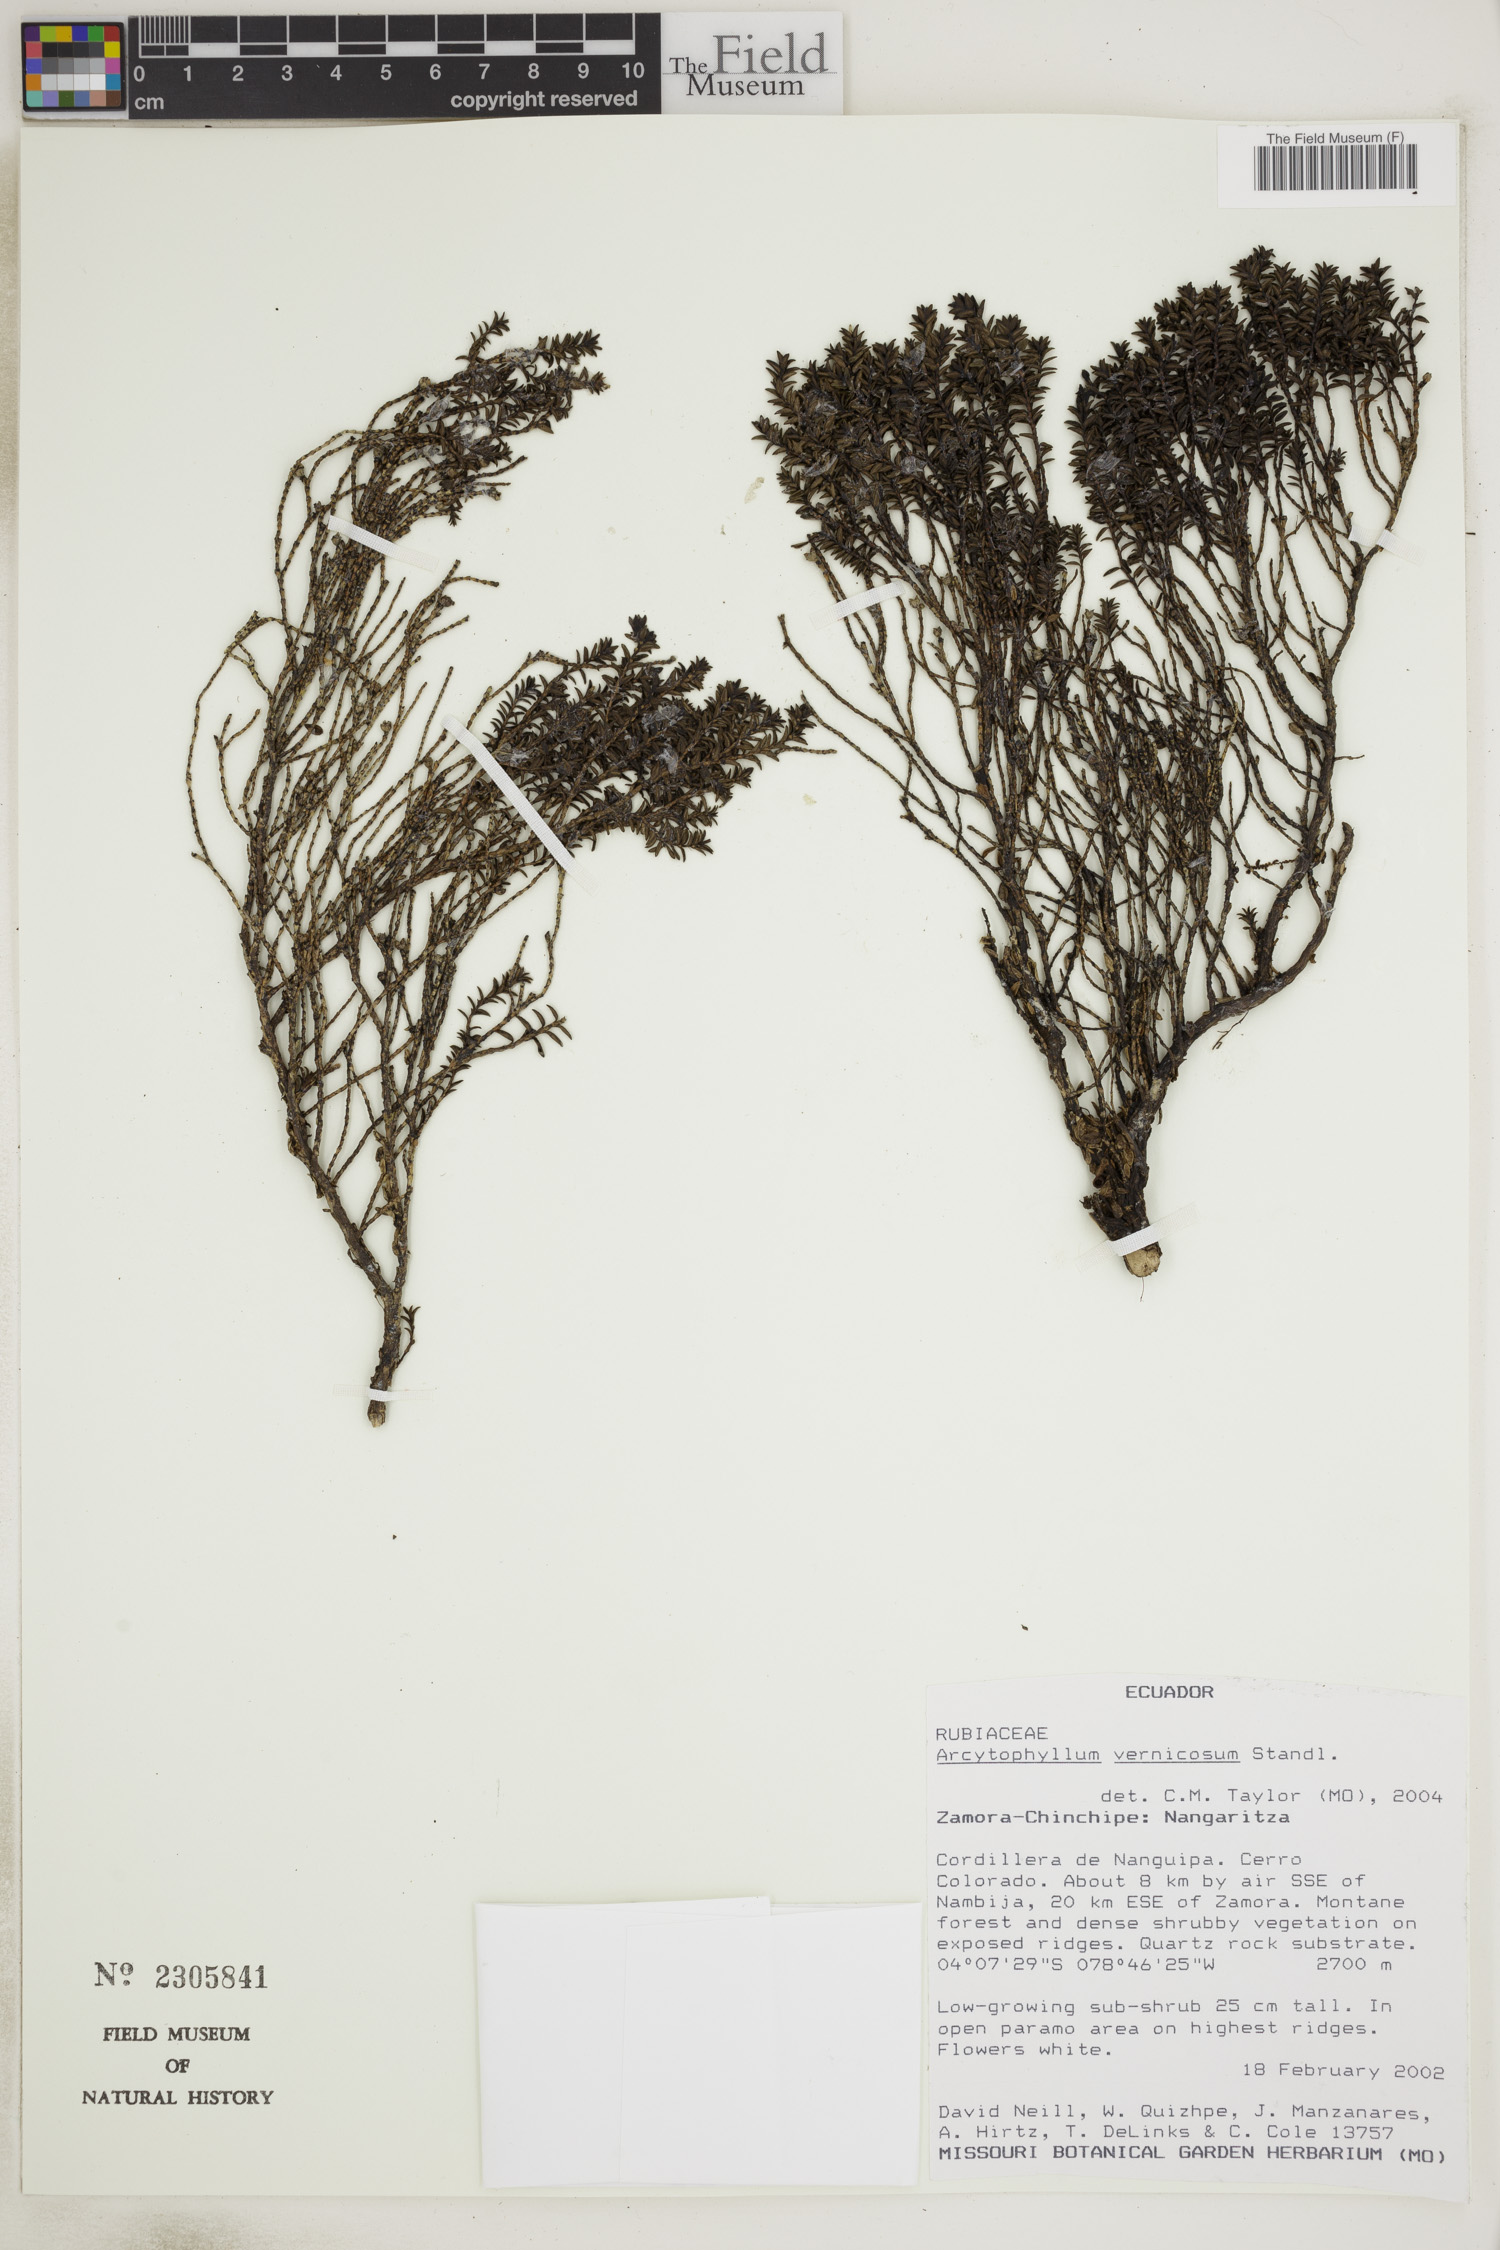 Arcytophyllum vernicosum image